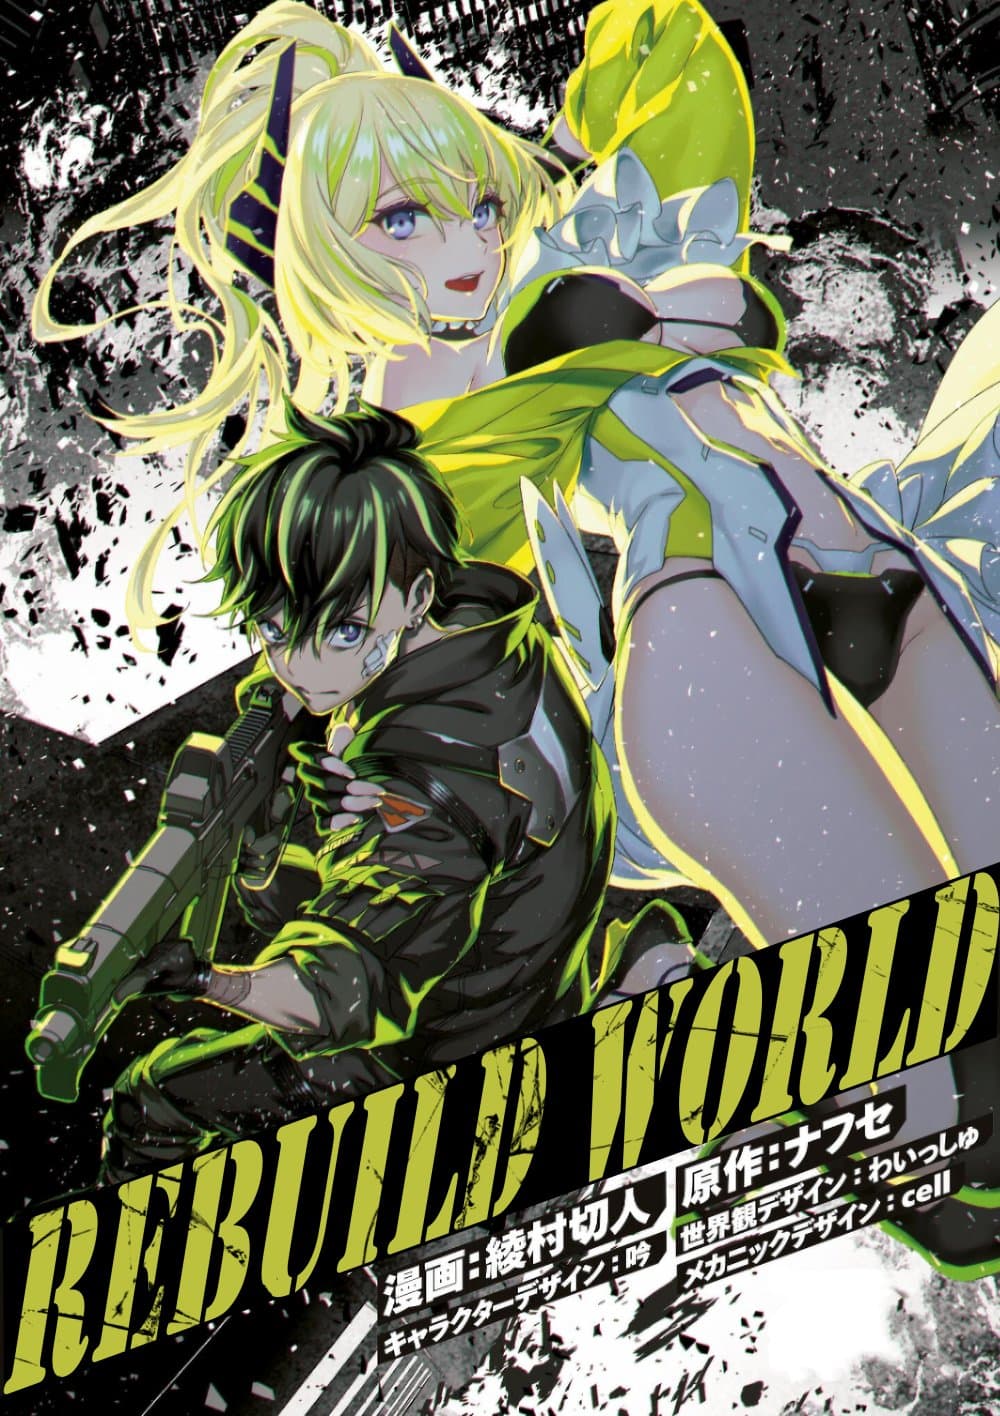 Rebuild World 27 (1)